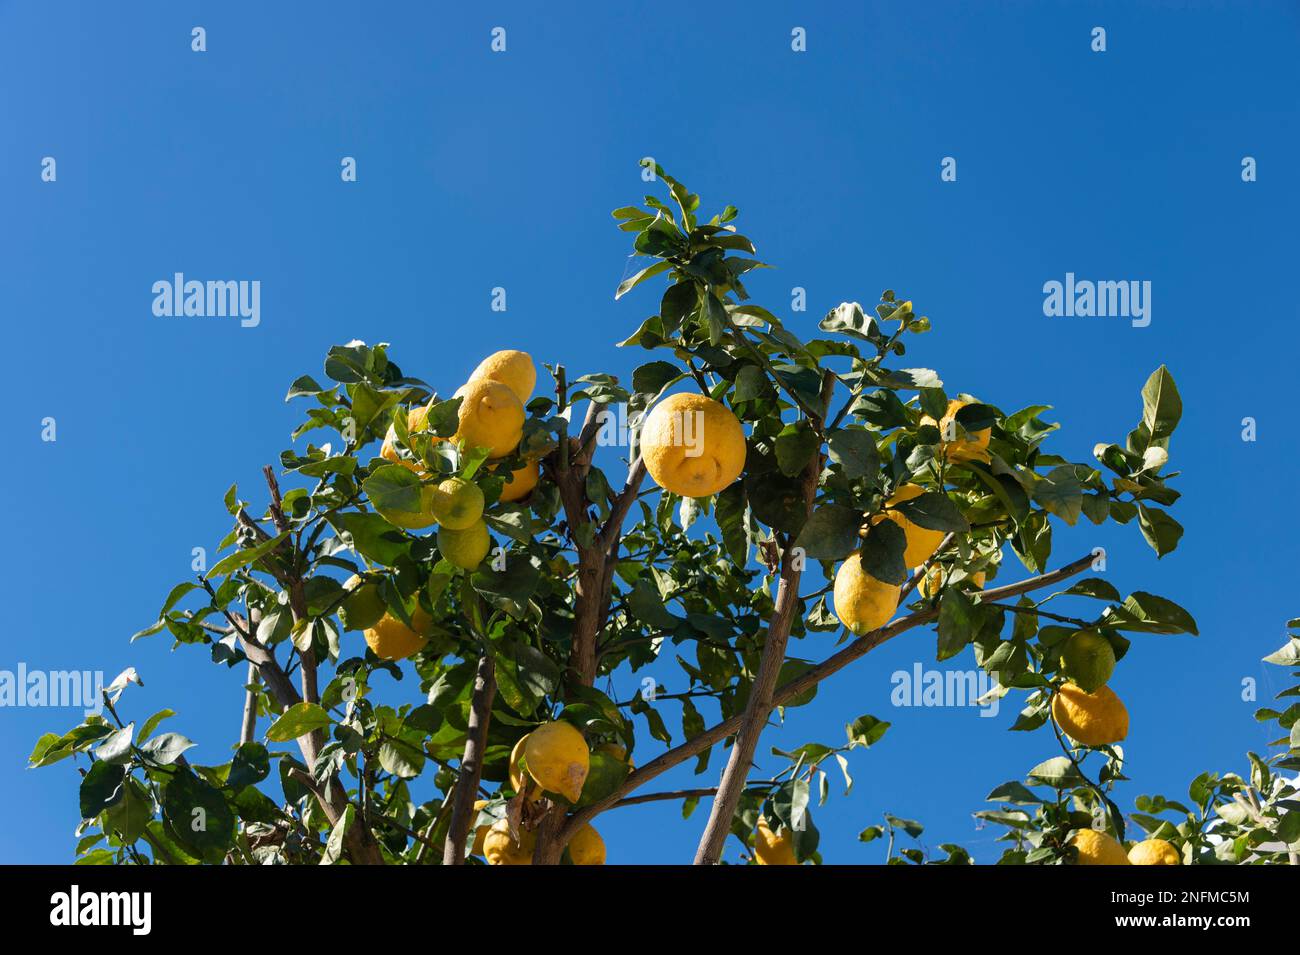 Lemon tree against a blue sky in the Algarve, Portugal Stock Photo